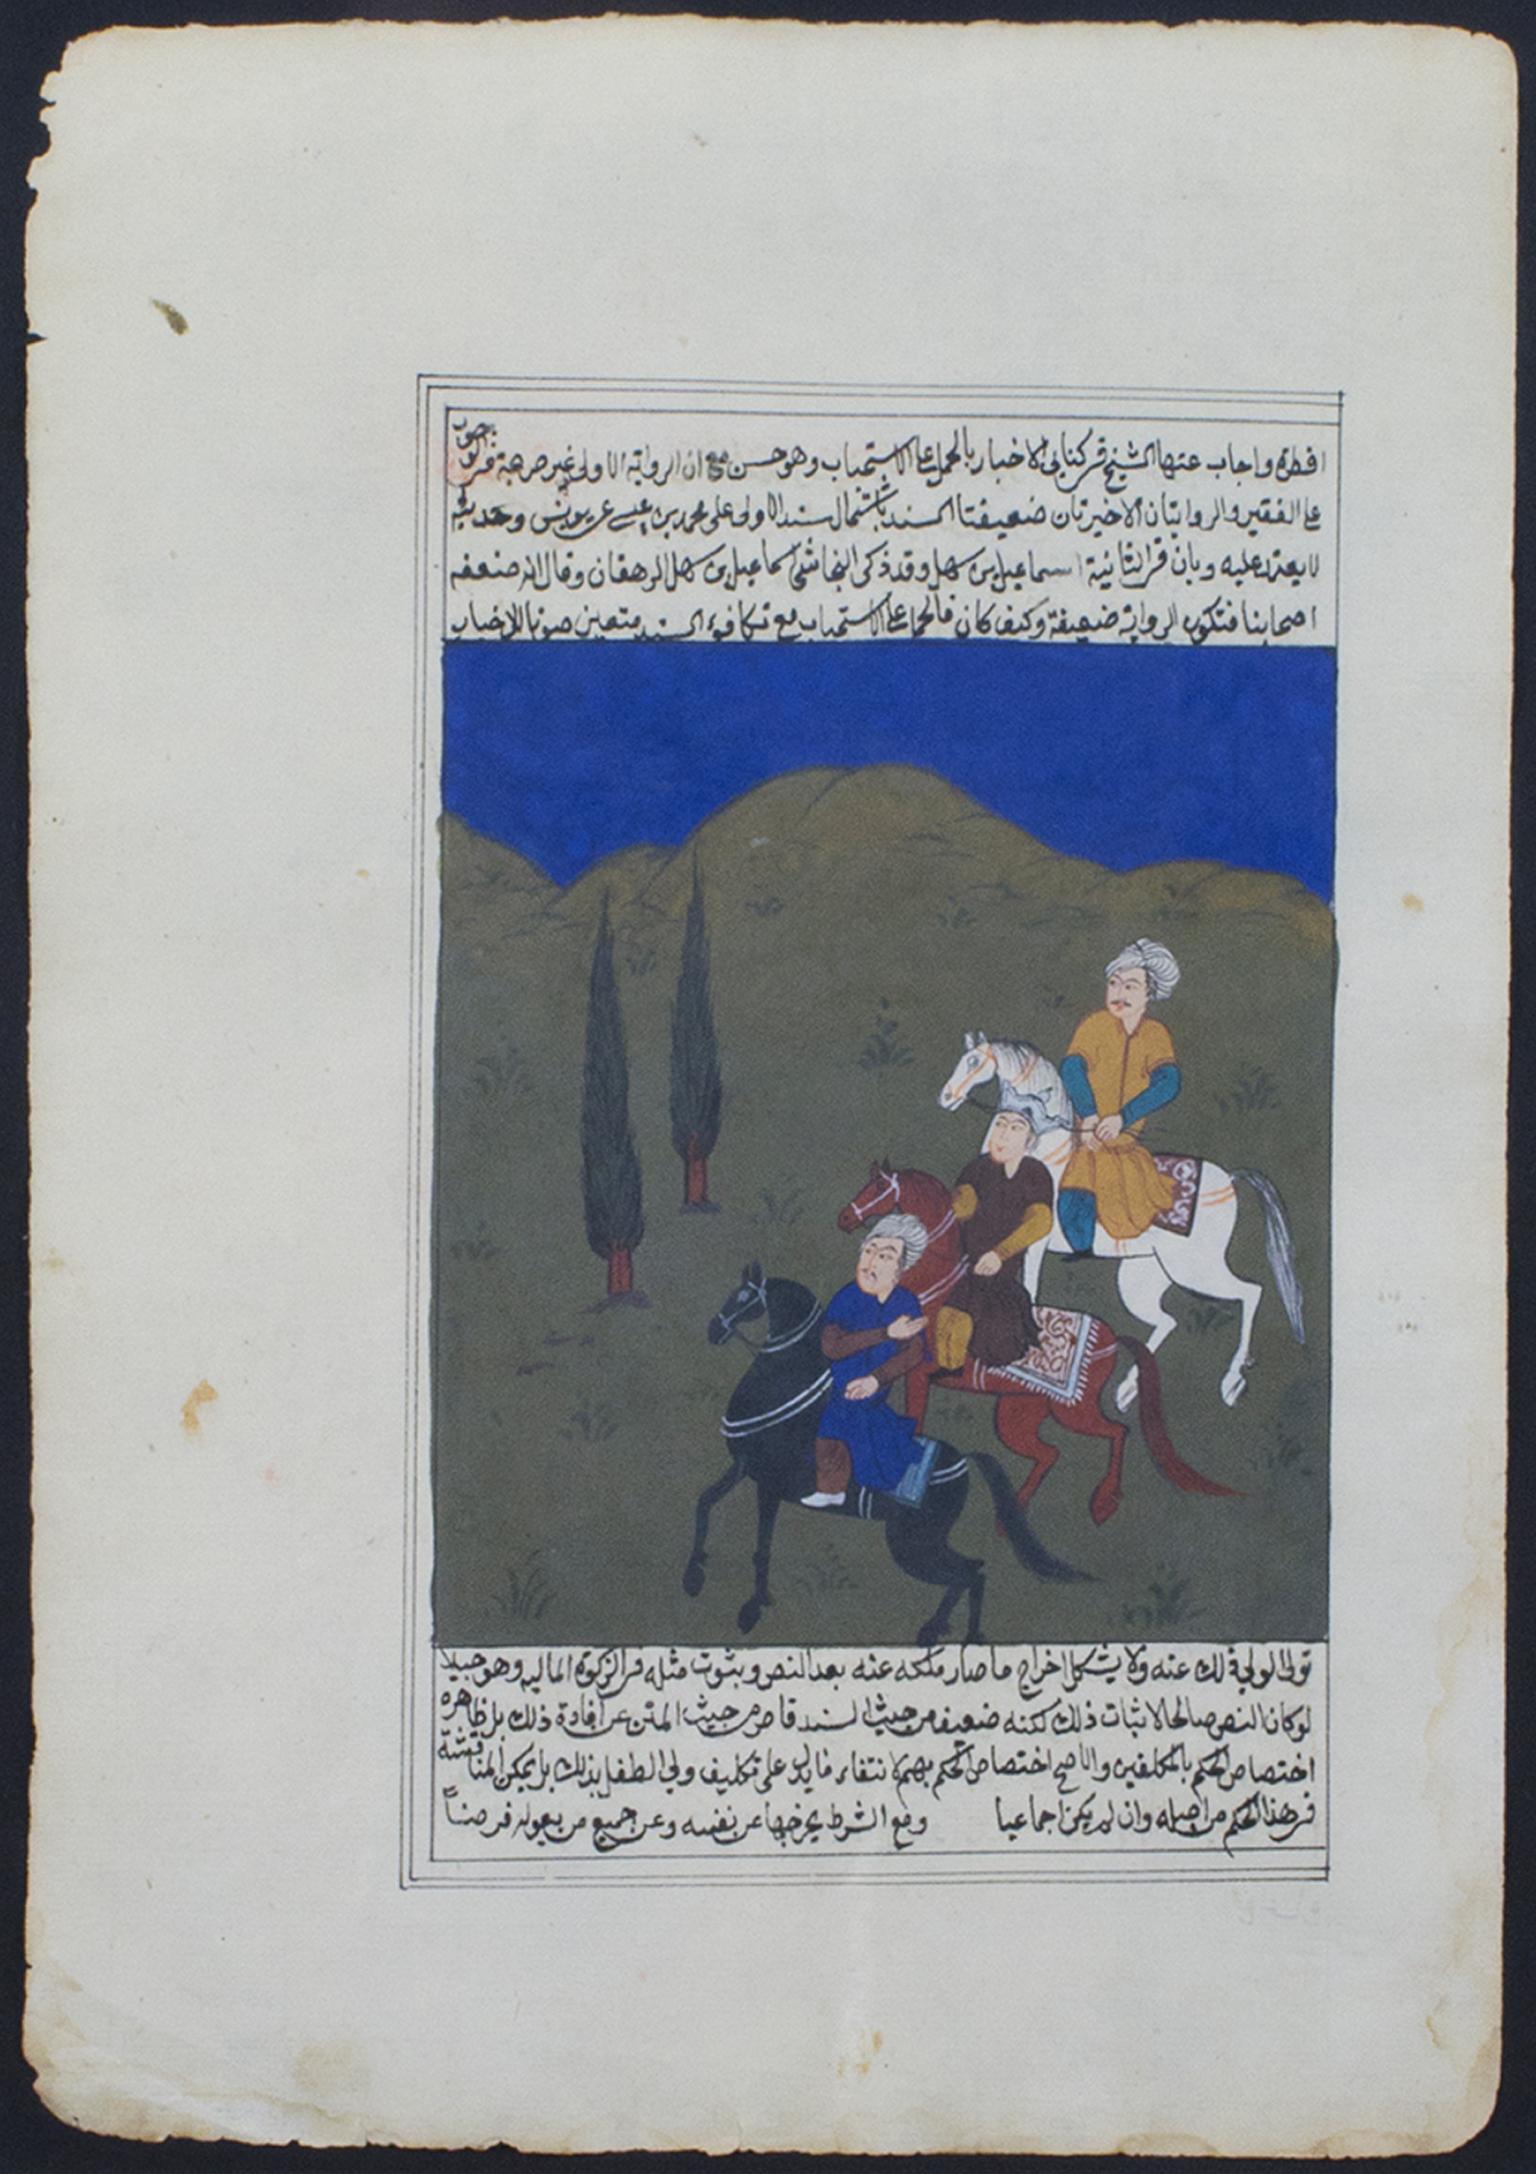 Figurative Art Unknown - "Three Riders, Two Trees", Tempera sur papier d'un artiste persan inconnu